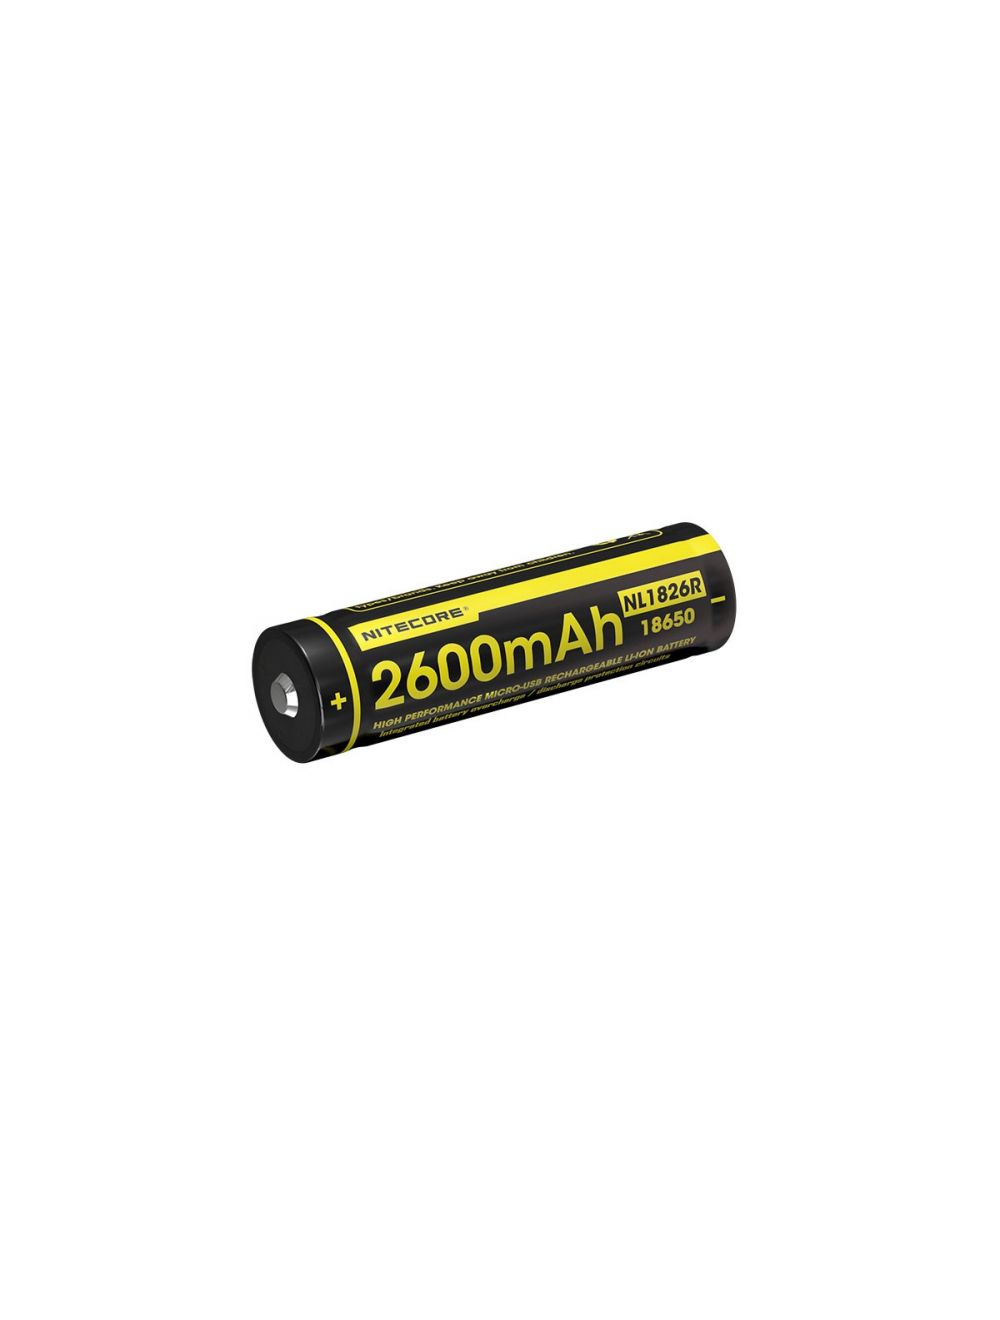 Hesje Graf Voorspellen Nitecore NL1826R USB Oplaadbare 18650 Li-Ion batterij 2600mAh kopen?  Multitools.nl